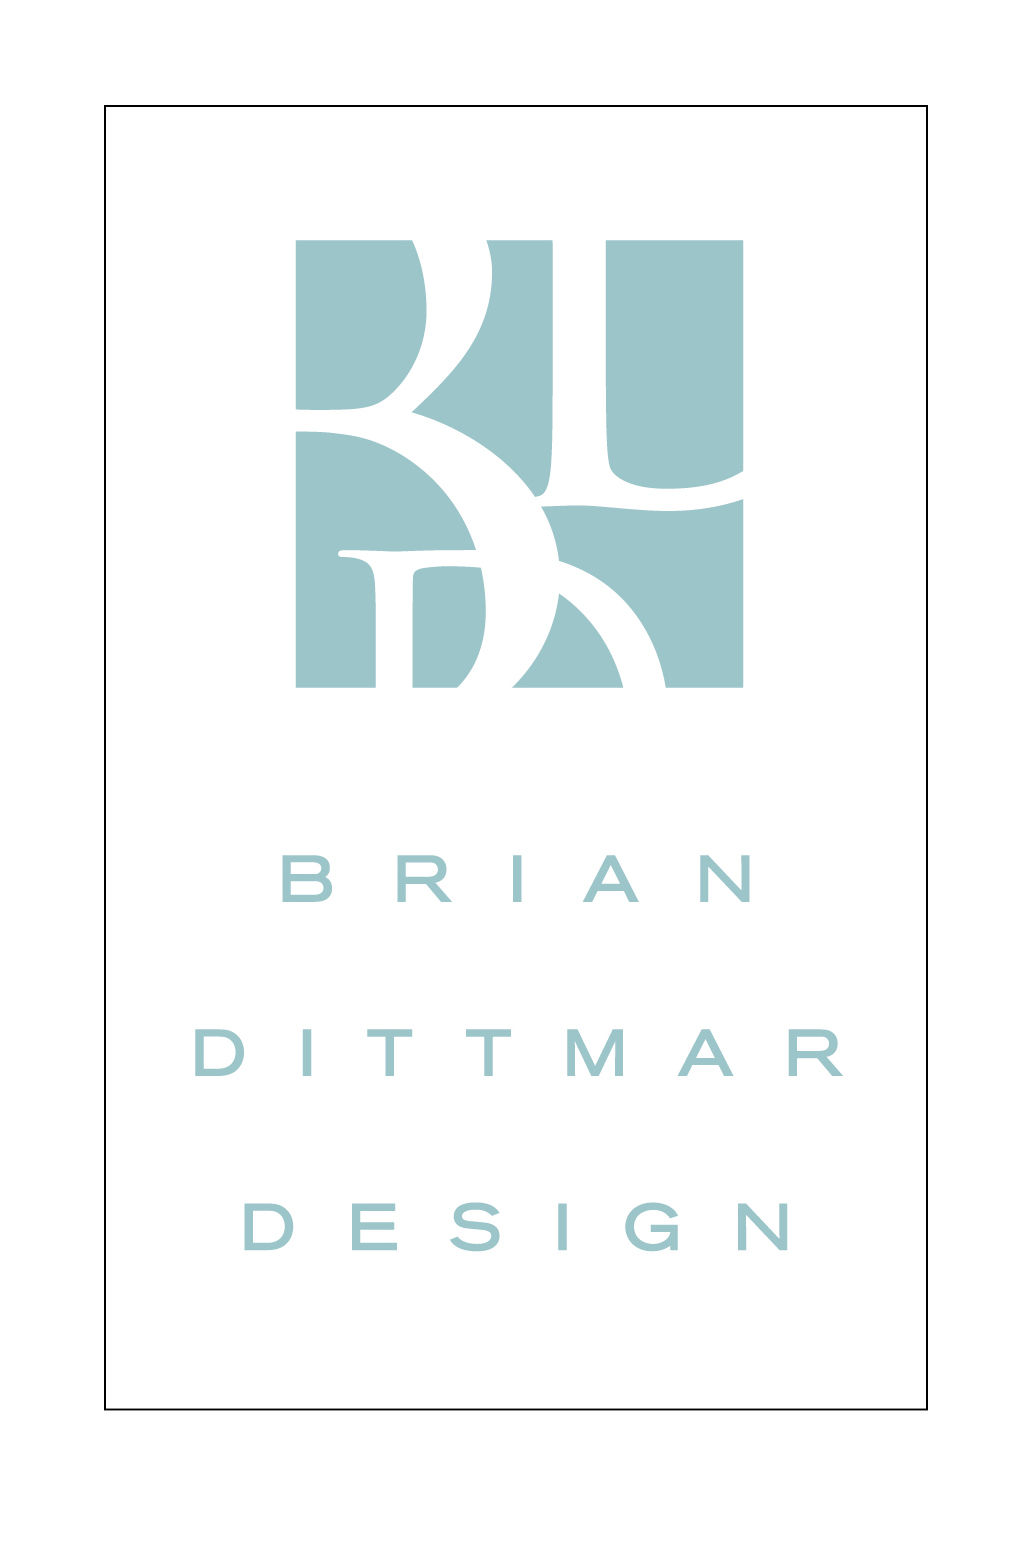 Brian Dittmar Design is an interior design studio based in San Francisco, California.